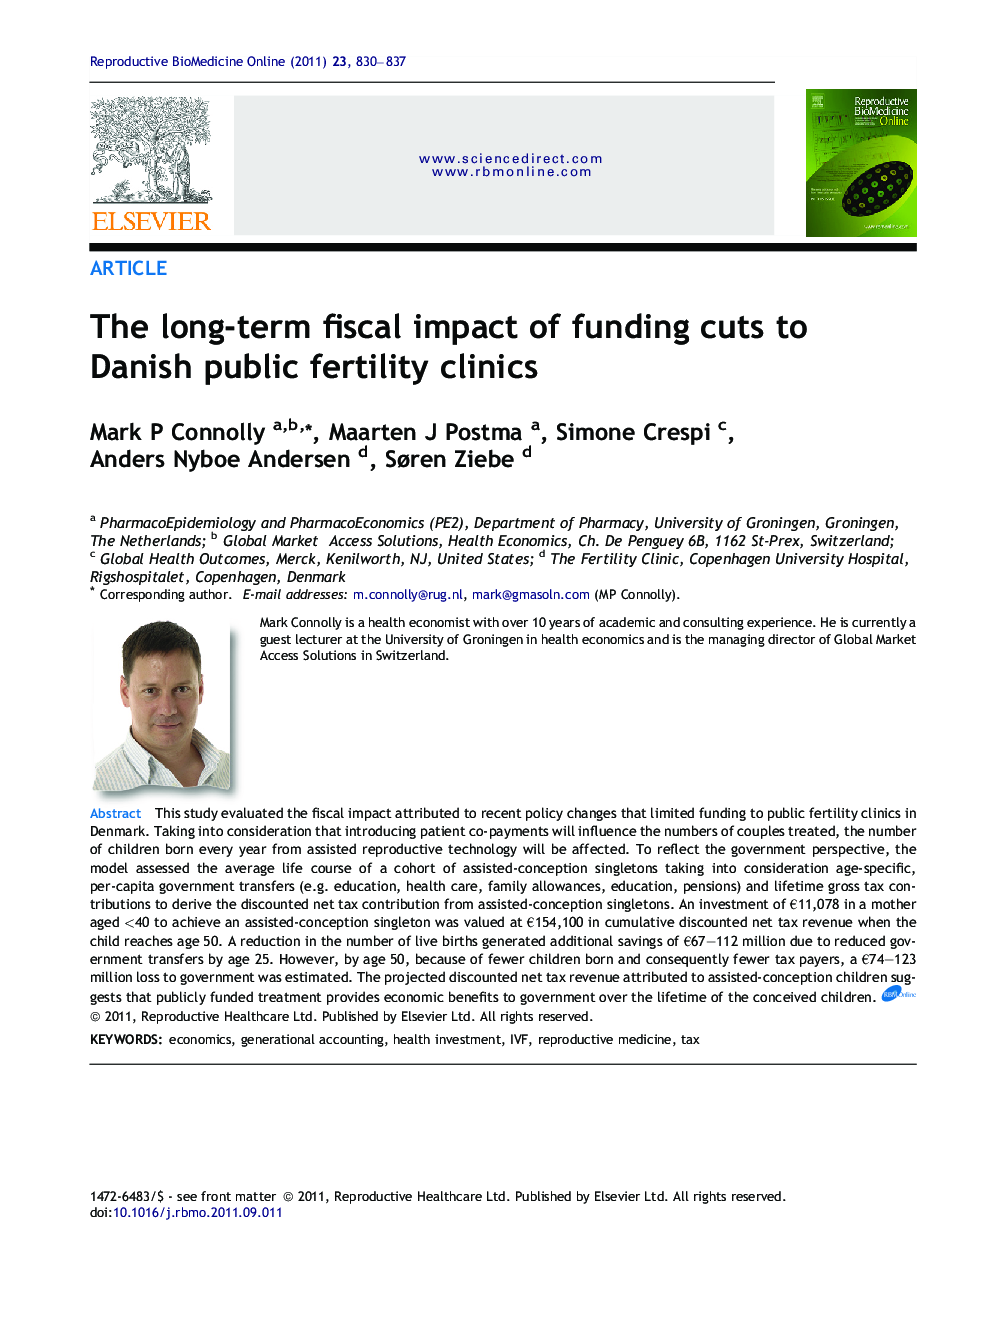 The long-term fiscal impact of funding cuts to Danish public fertility clinics 